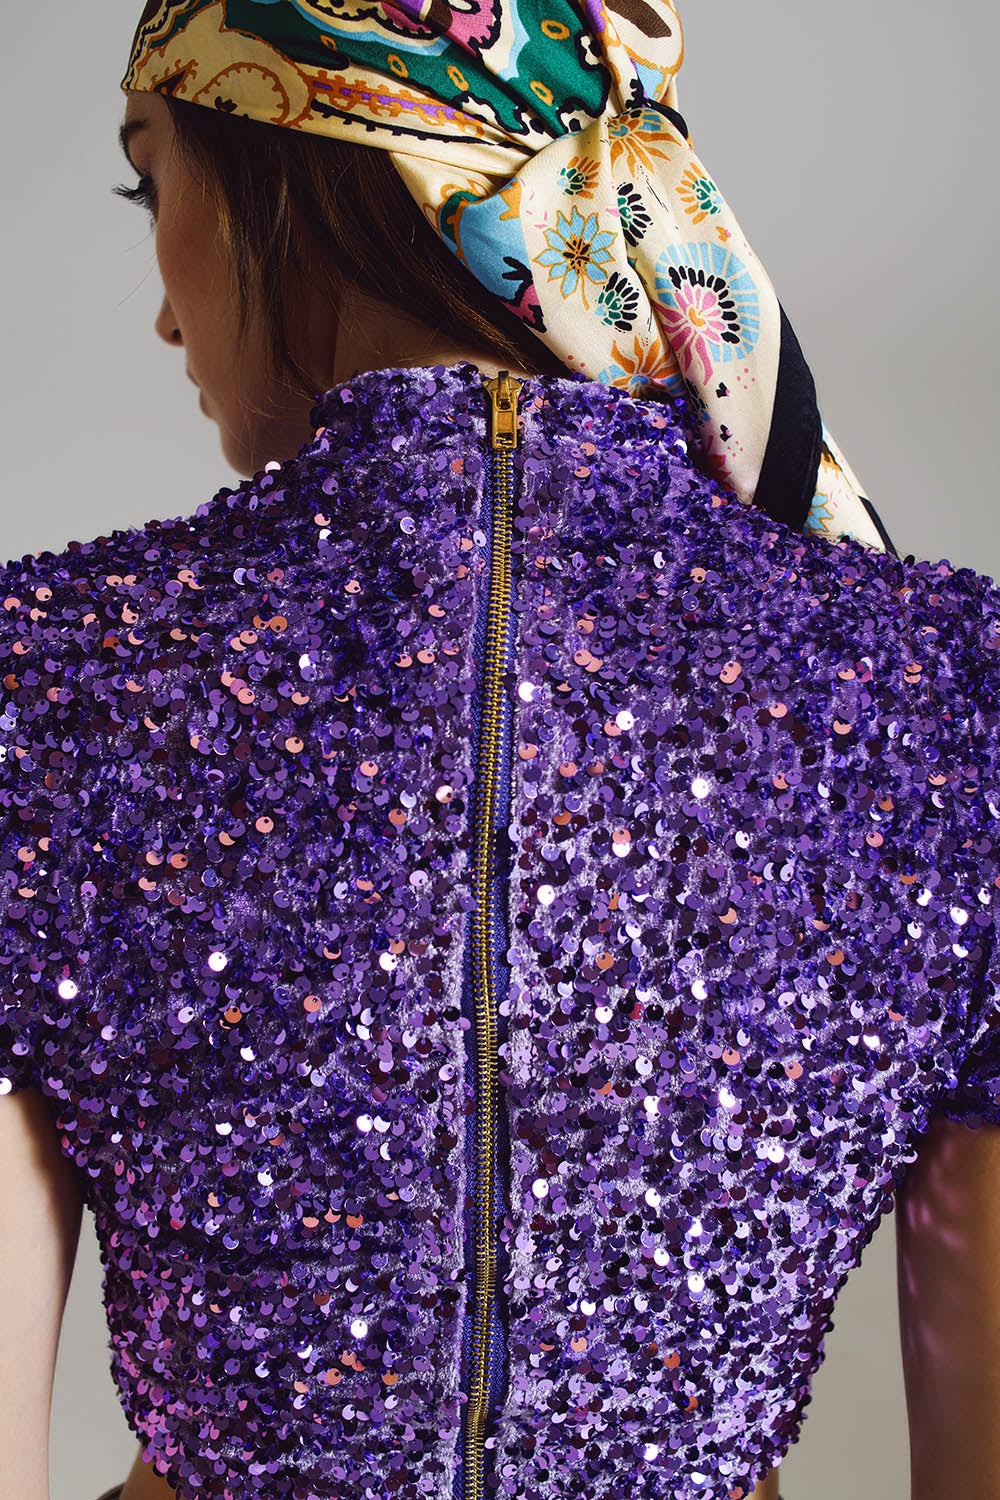 Back view of sparkly metallic purple zip up shirt on women. 